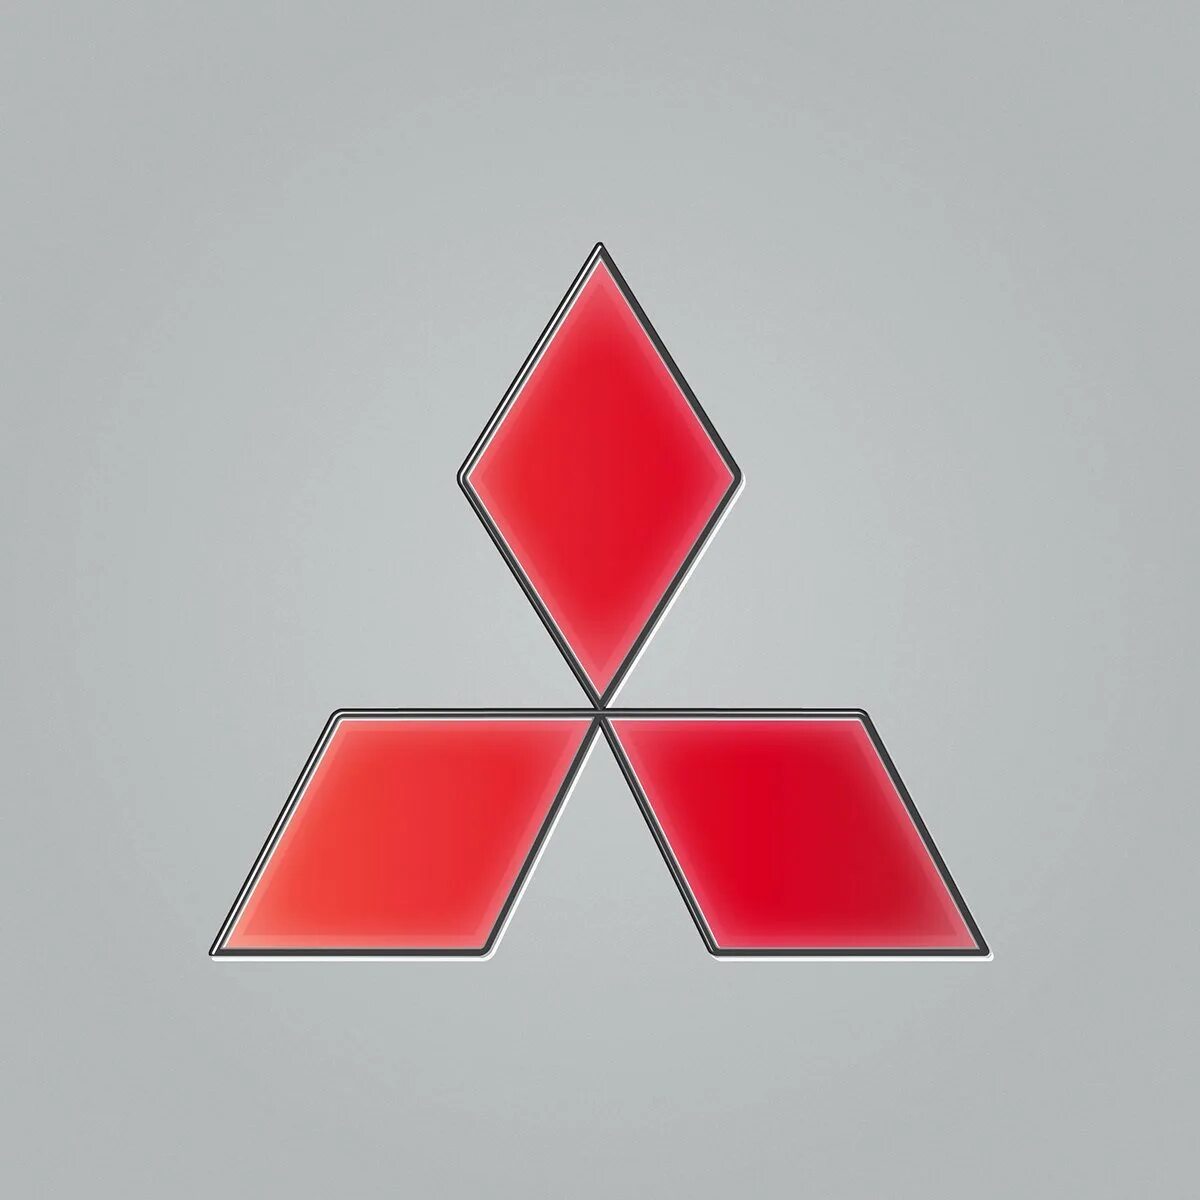 Mitsubishi название. Мицубиси лого. Митсубиши значок. Митсубиси Аутлендер значок. Mitsubishi символ.